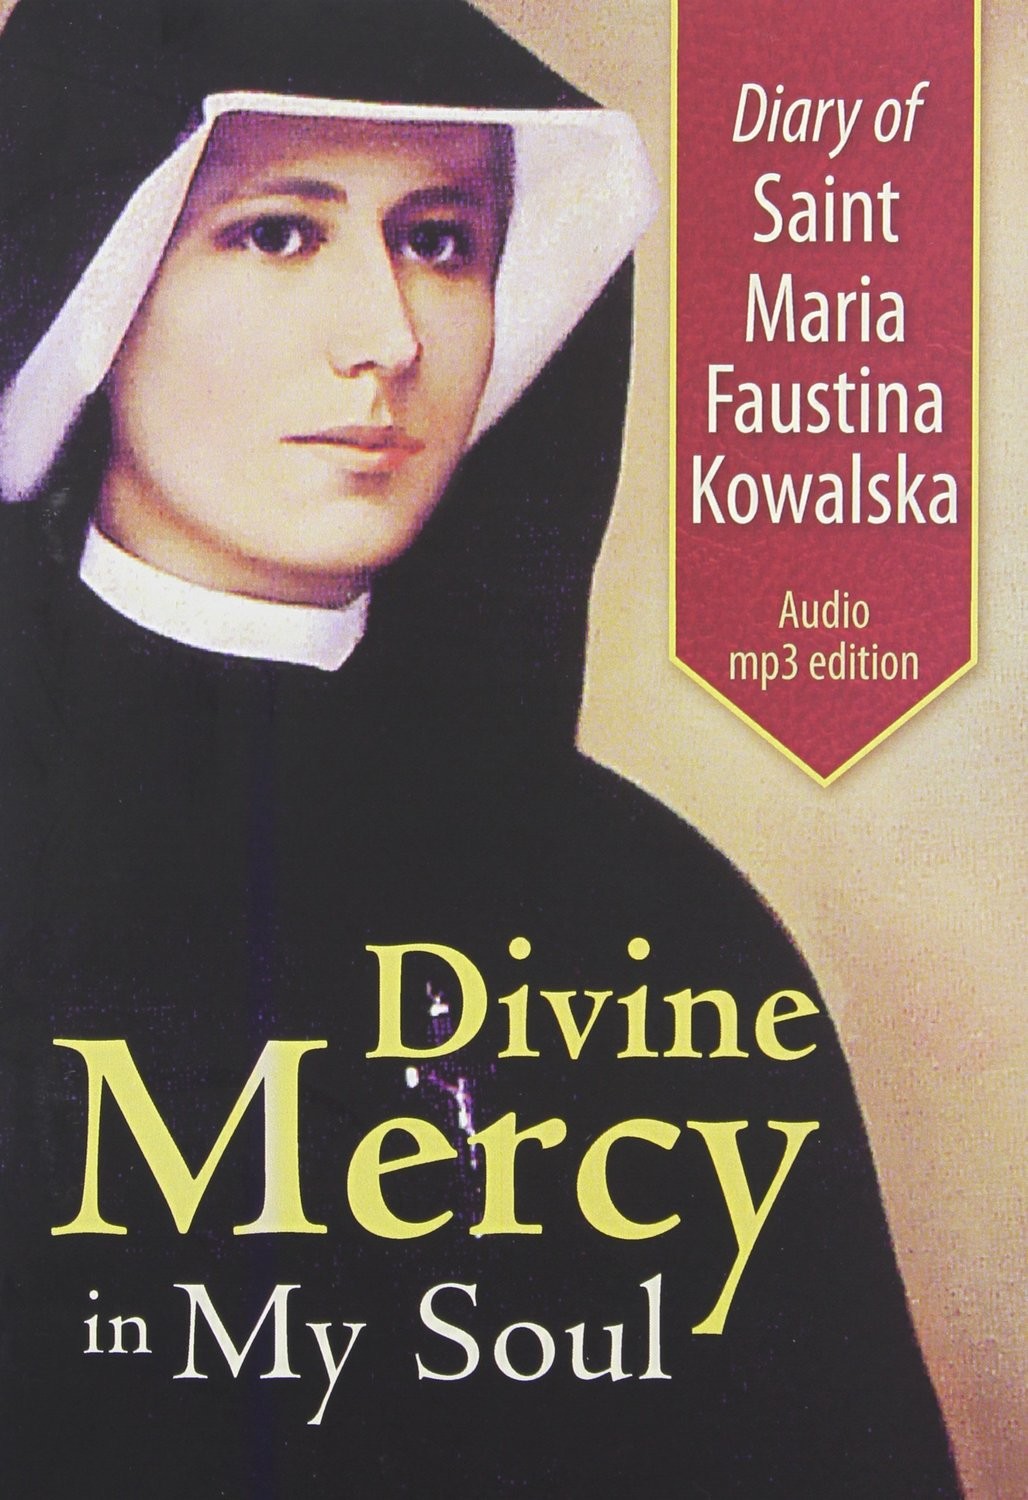 CD Diary of Saint Maria Faustina Kowalska: Divine Mercy in My Soul Audio CD MP3